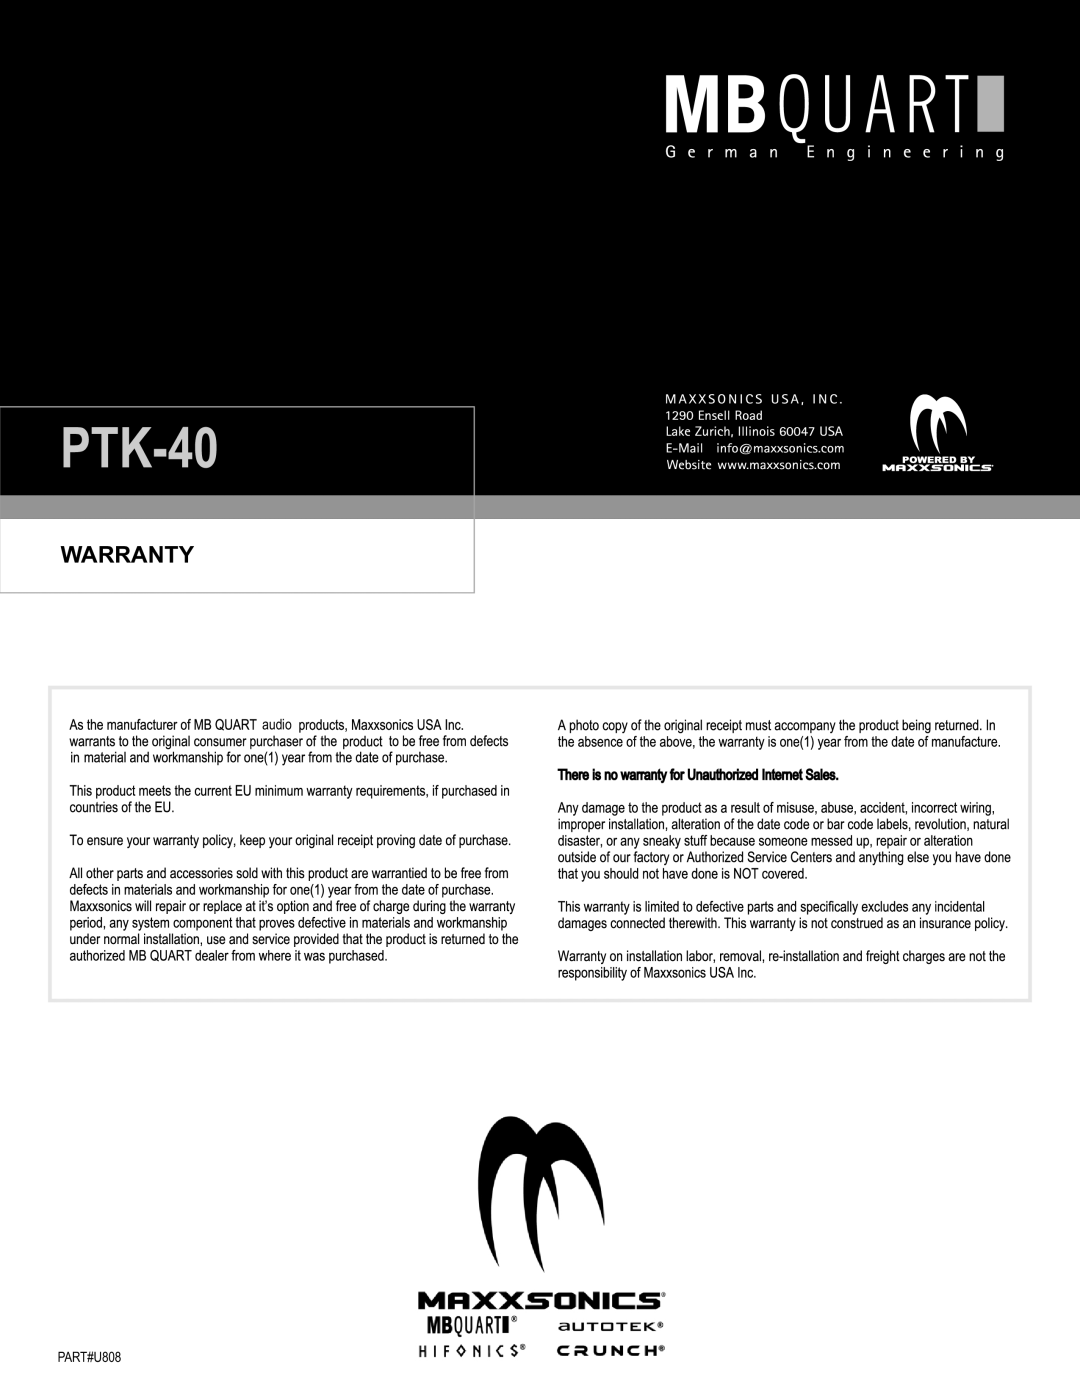 MB QUART PTK-40 installation manual Warranty, audio, PART#U808 